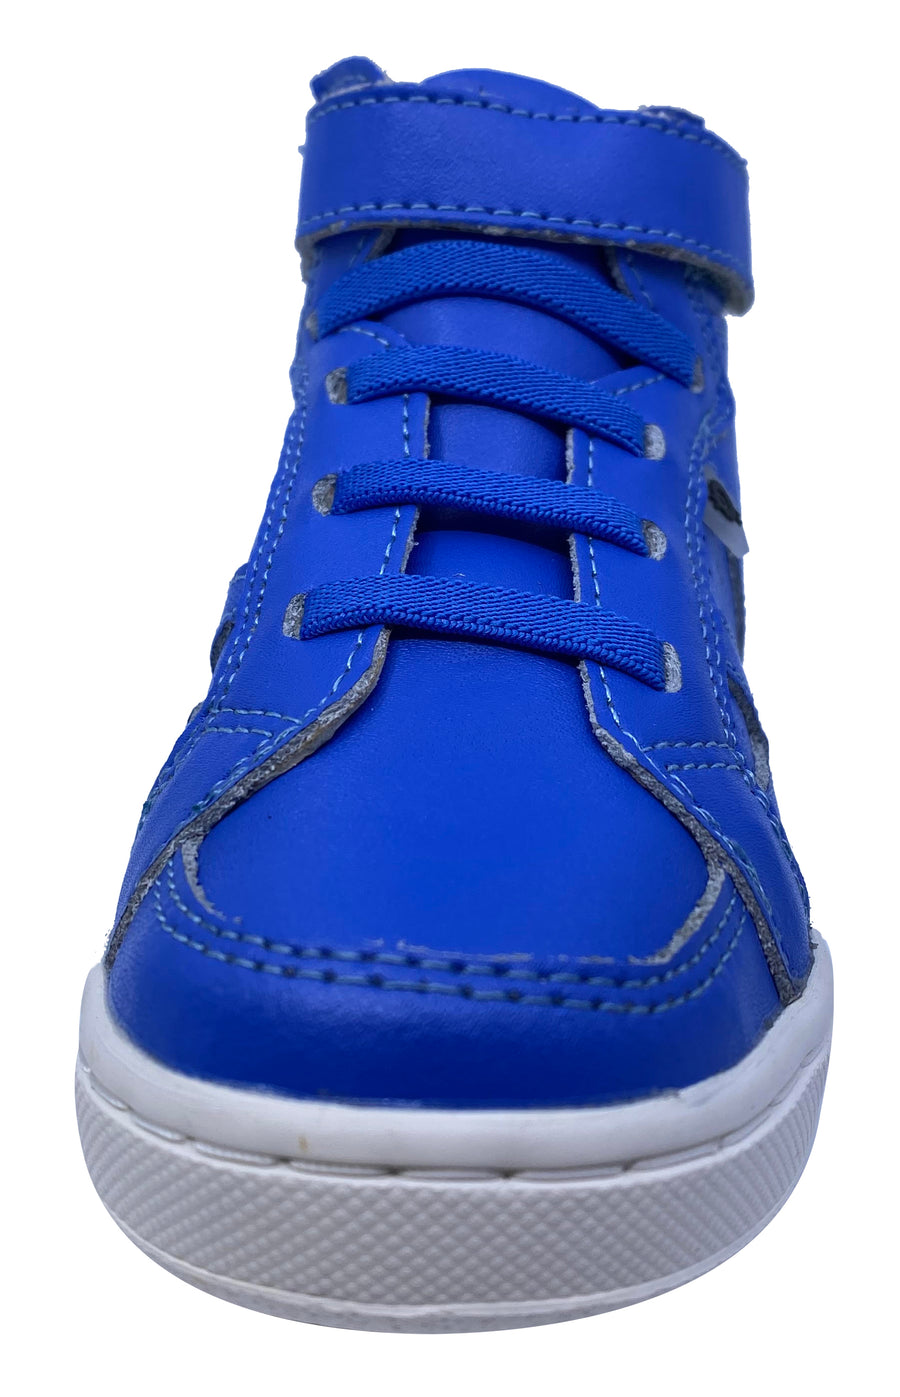 Old Soles Girl's & Boy's Starter Sneakers, Neon Blue